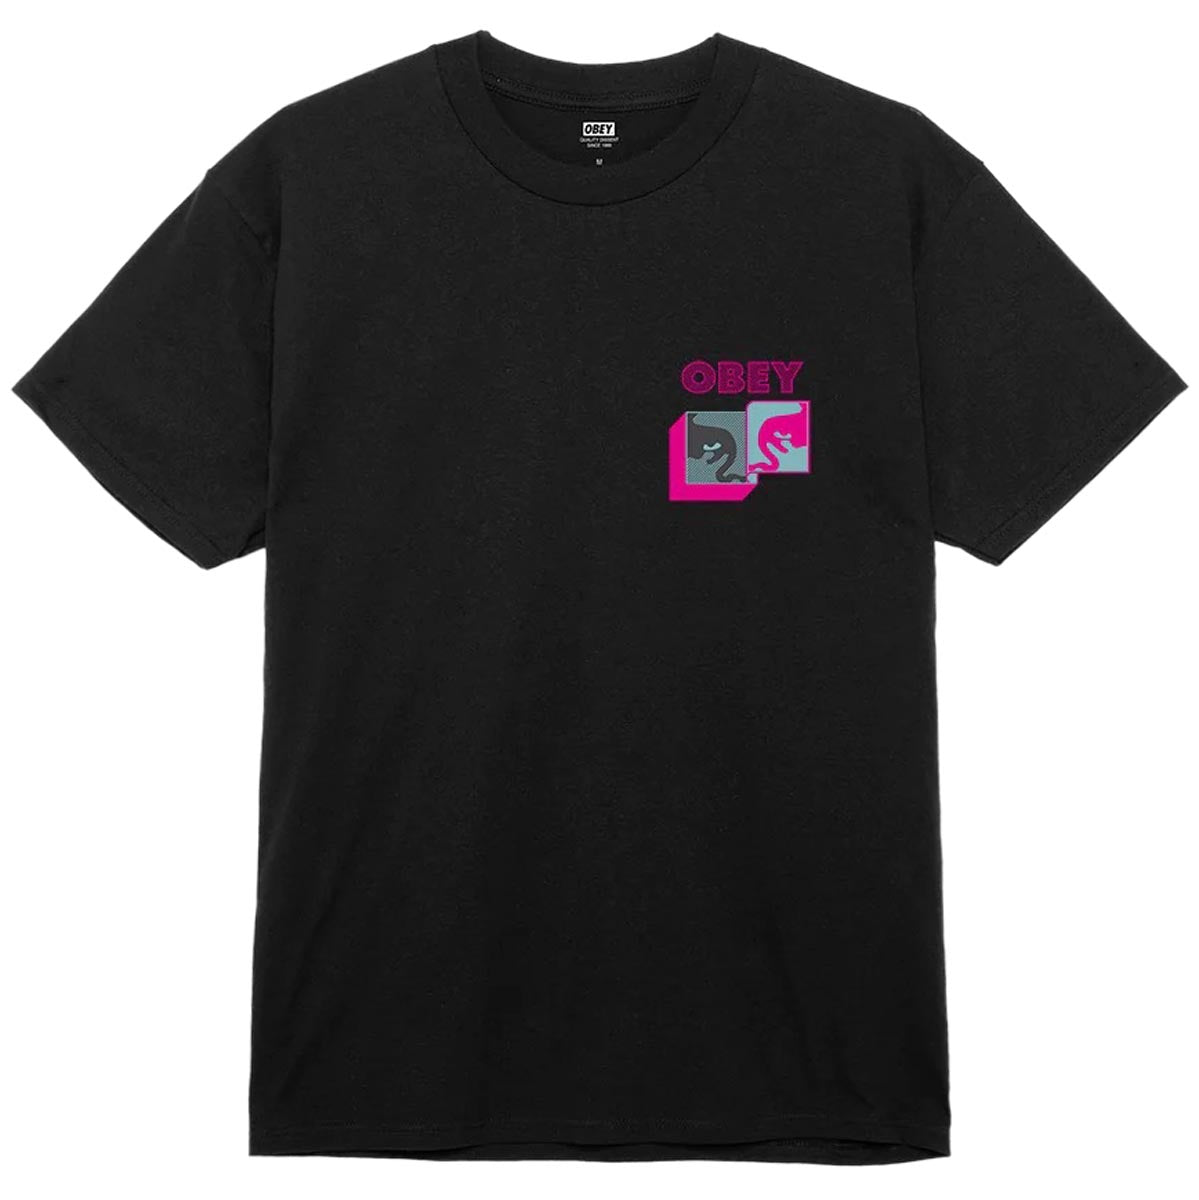 Obey Post Modern T-Shirt - Black image 2